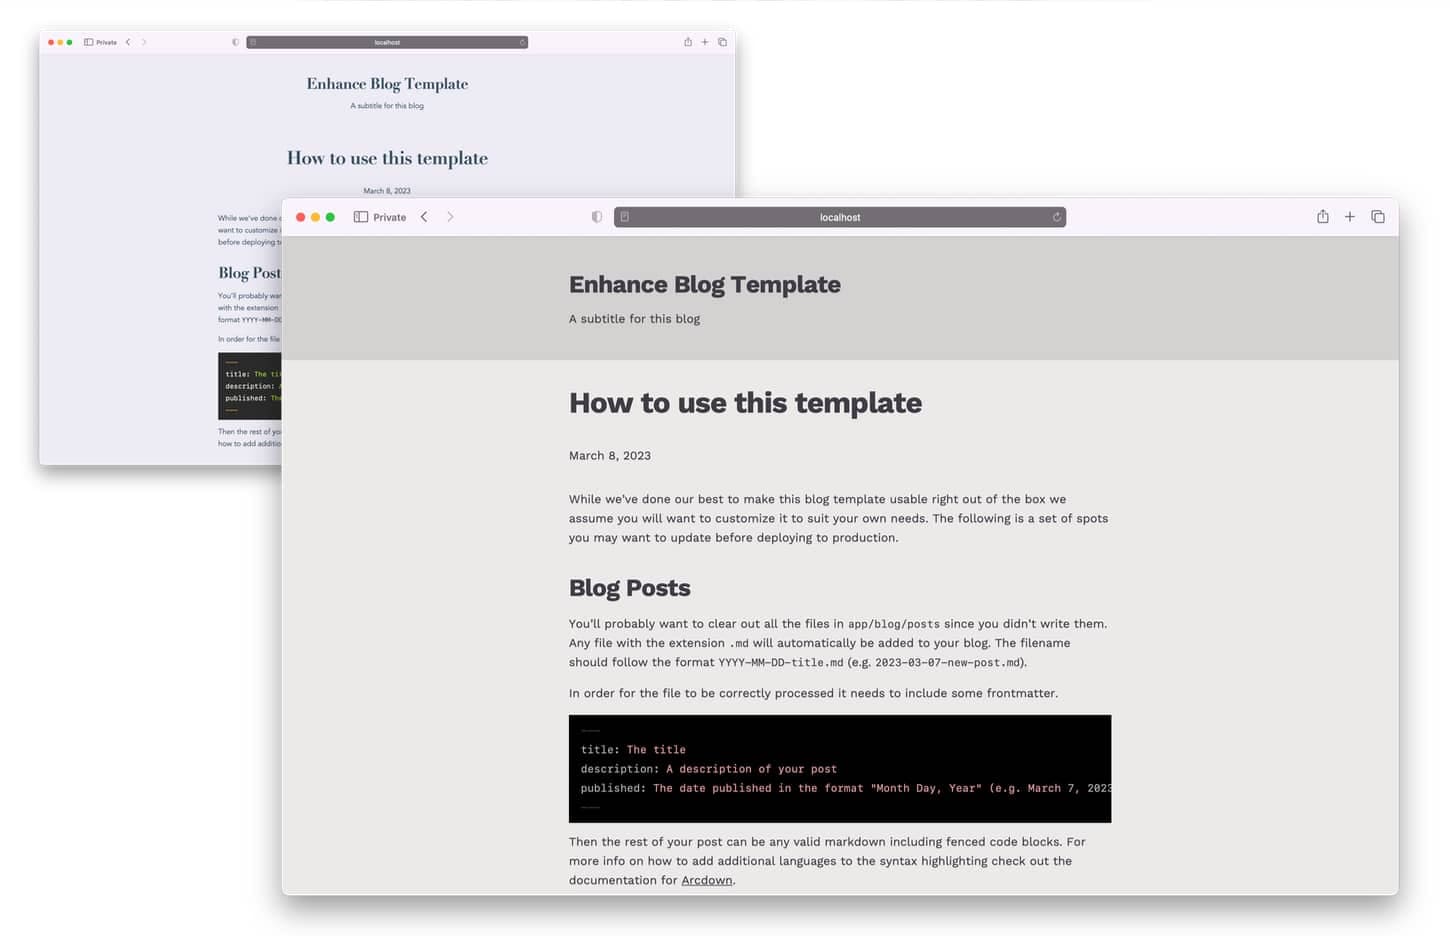 Customizing the Enhance Blog Template